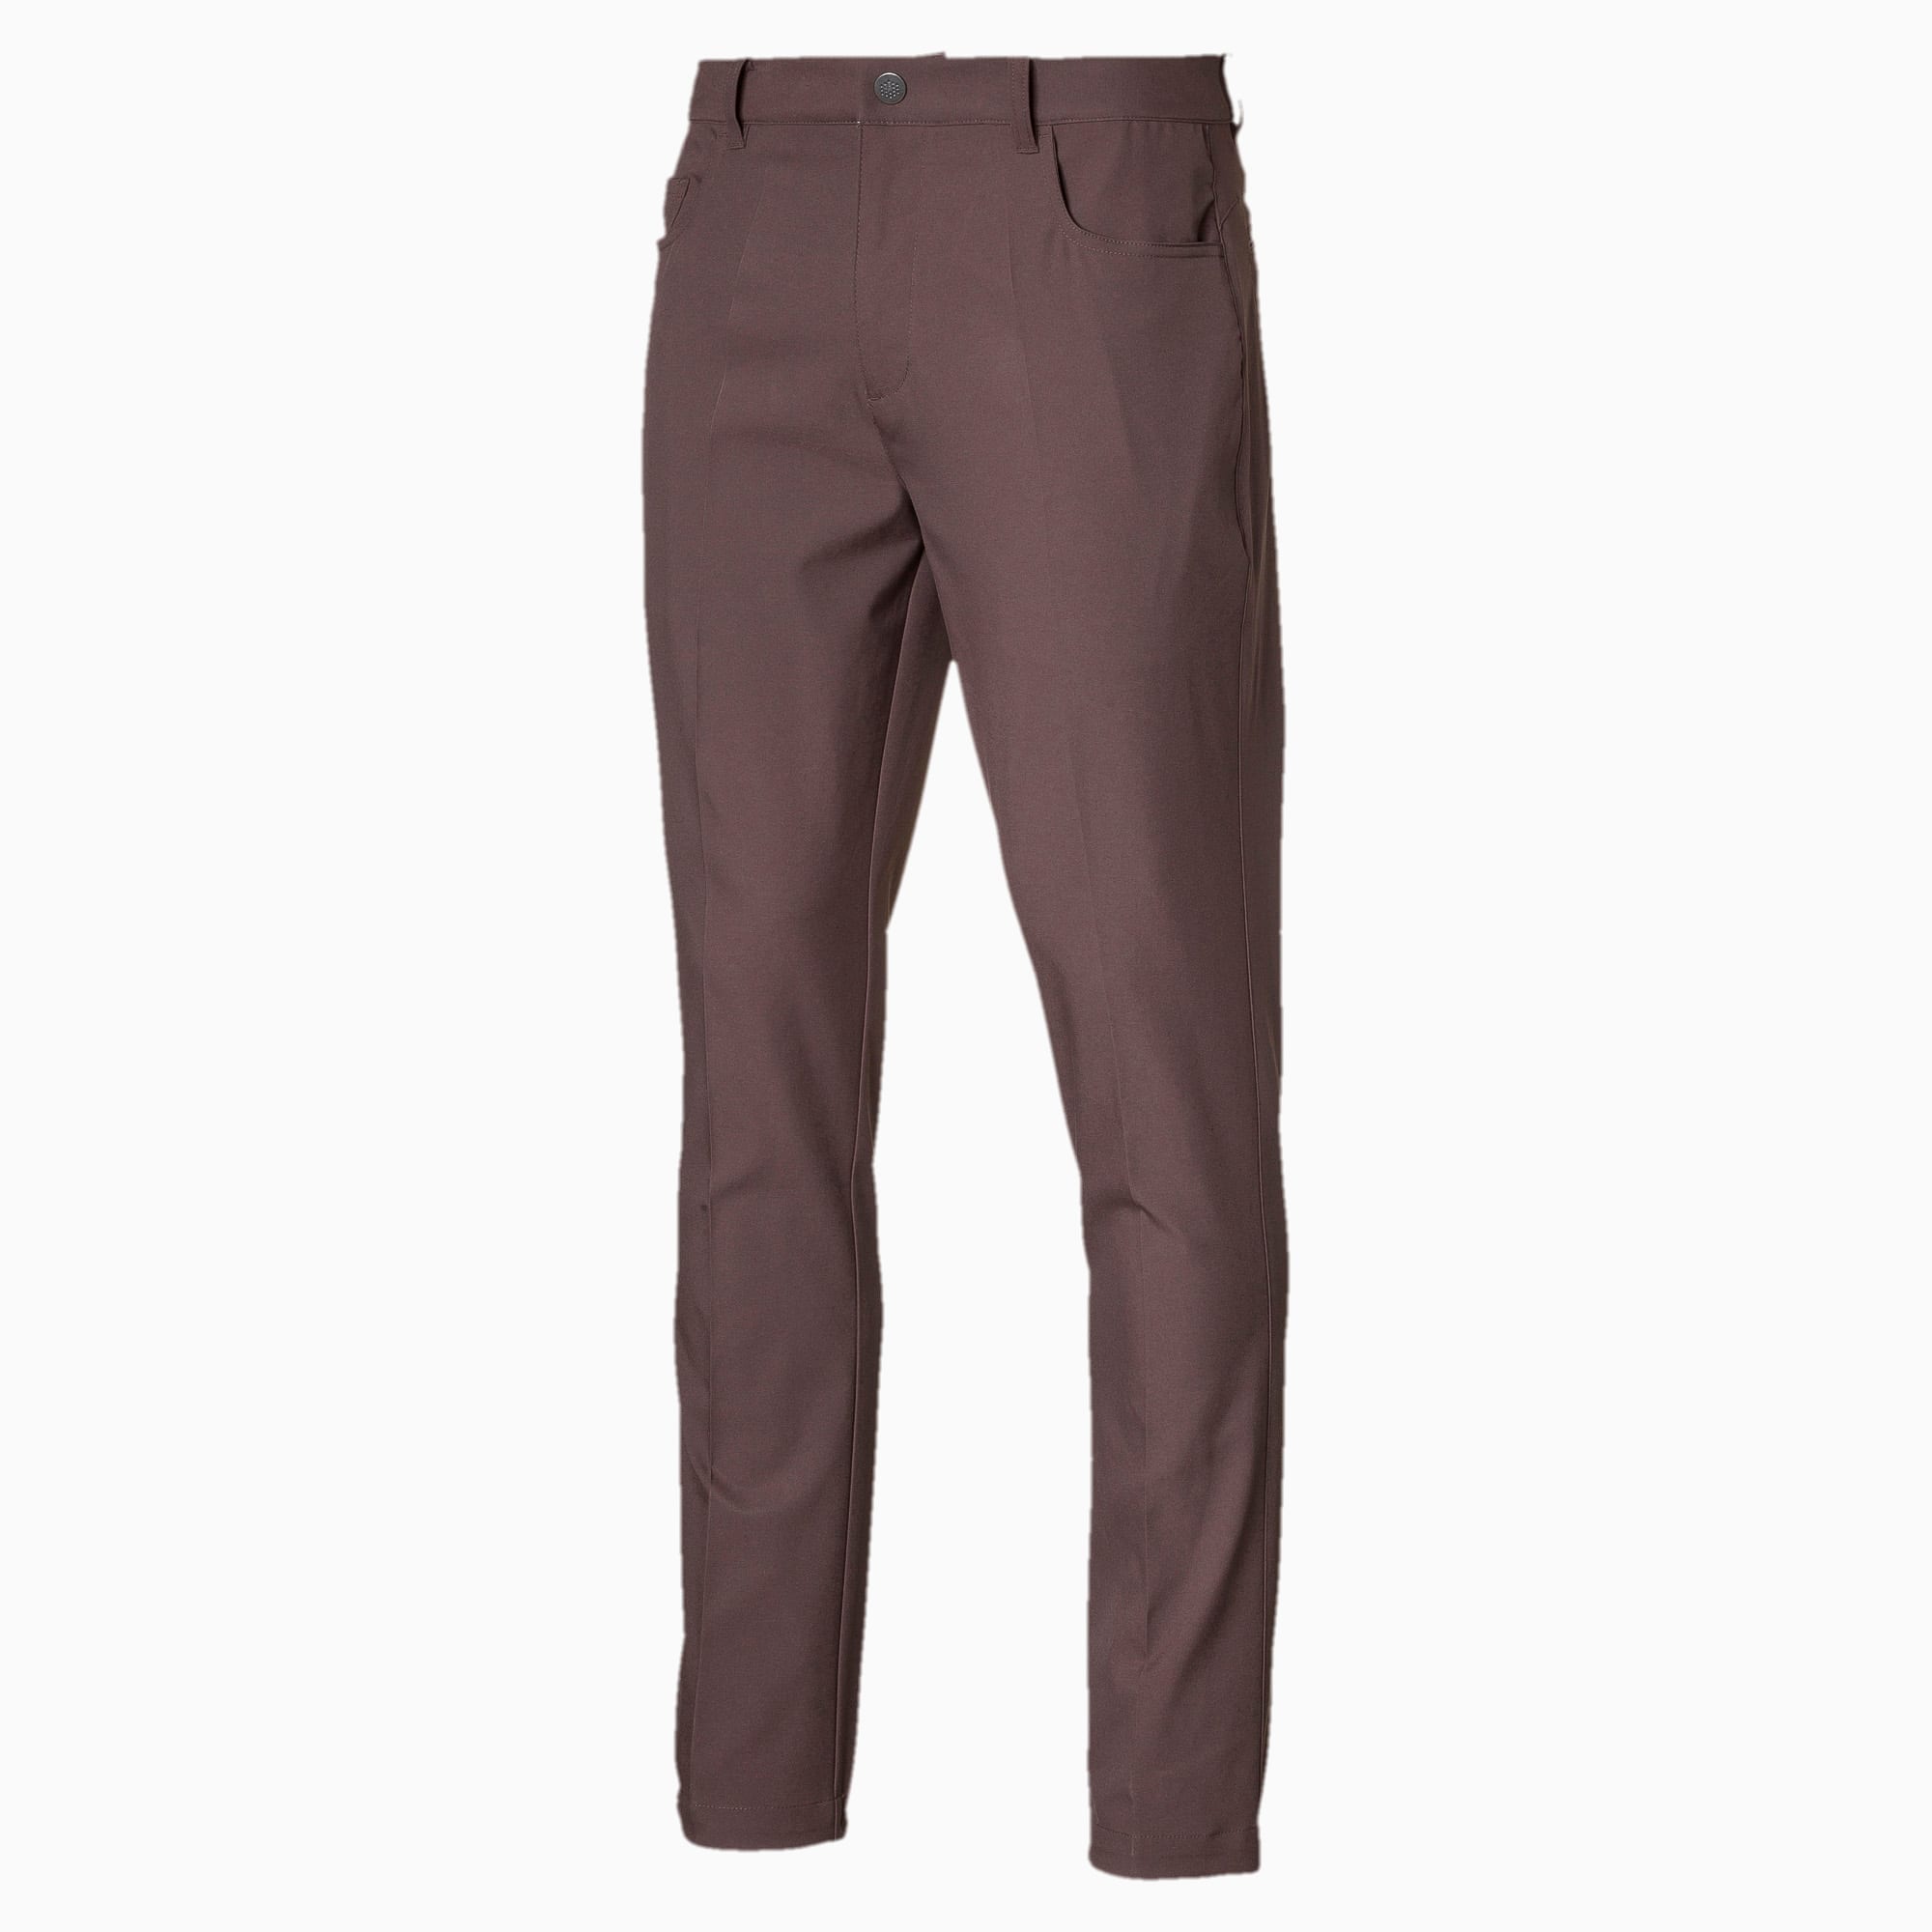 Jackpot 5 Pocket Men's Golf Pants, Chocolate Brown, large-SEA